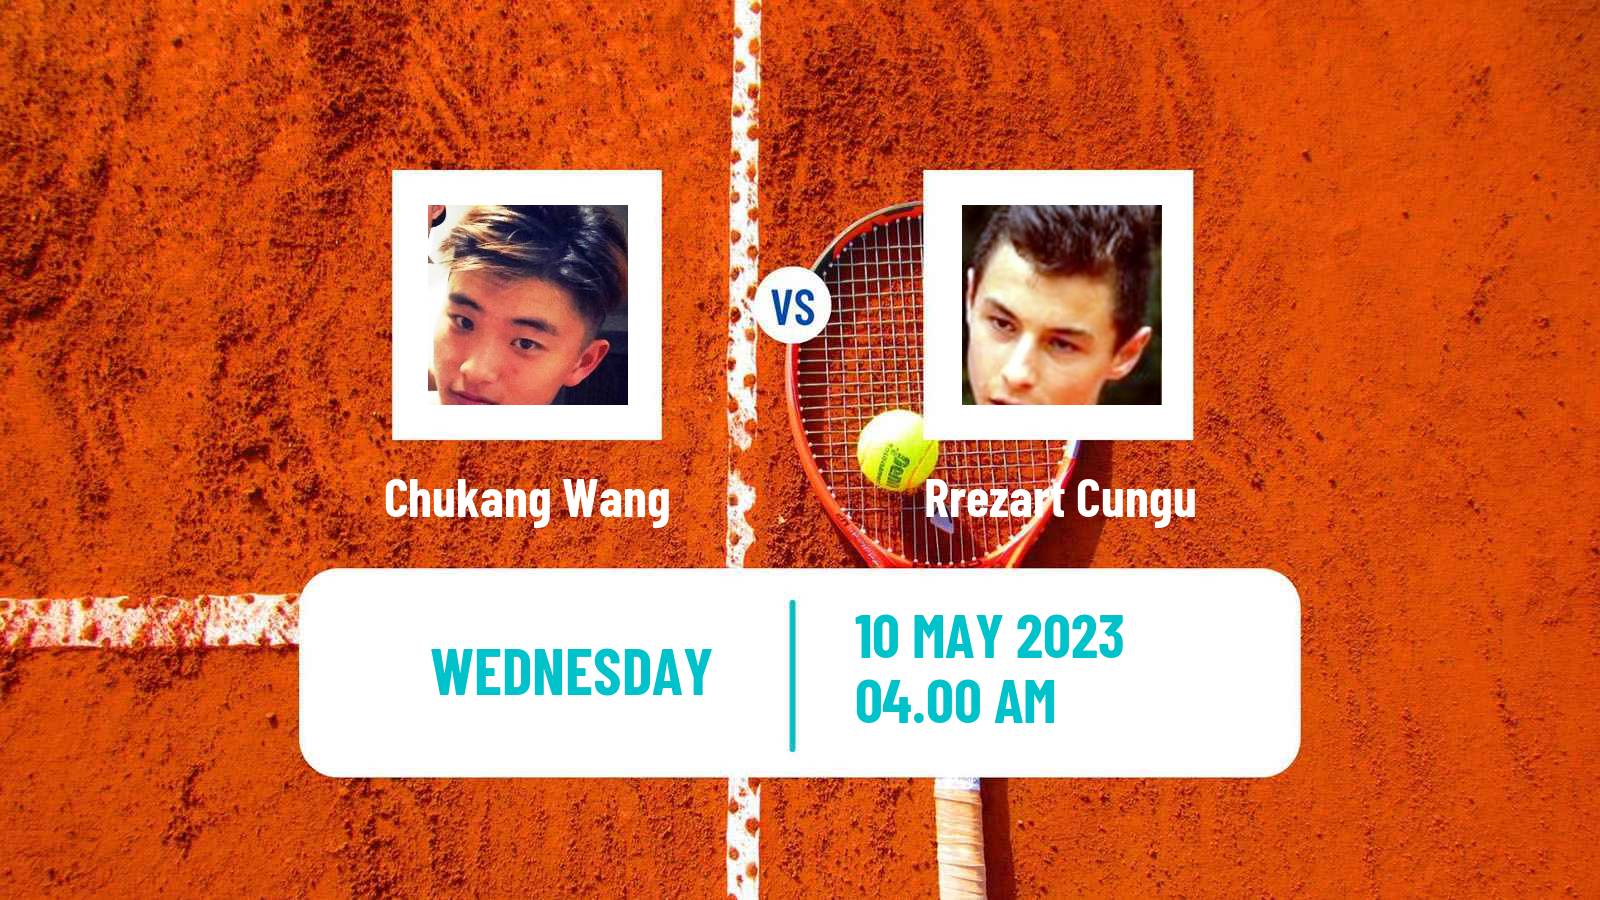 Tennis ITF Tournaments Chukang Wang - Rrezart Cungu